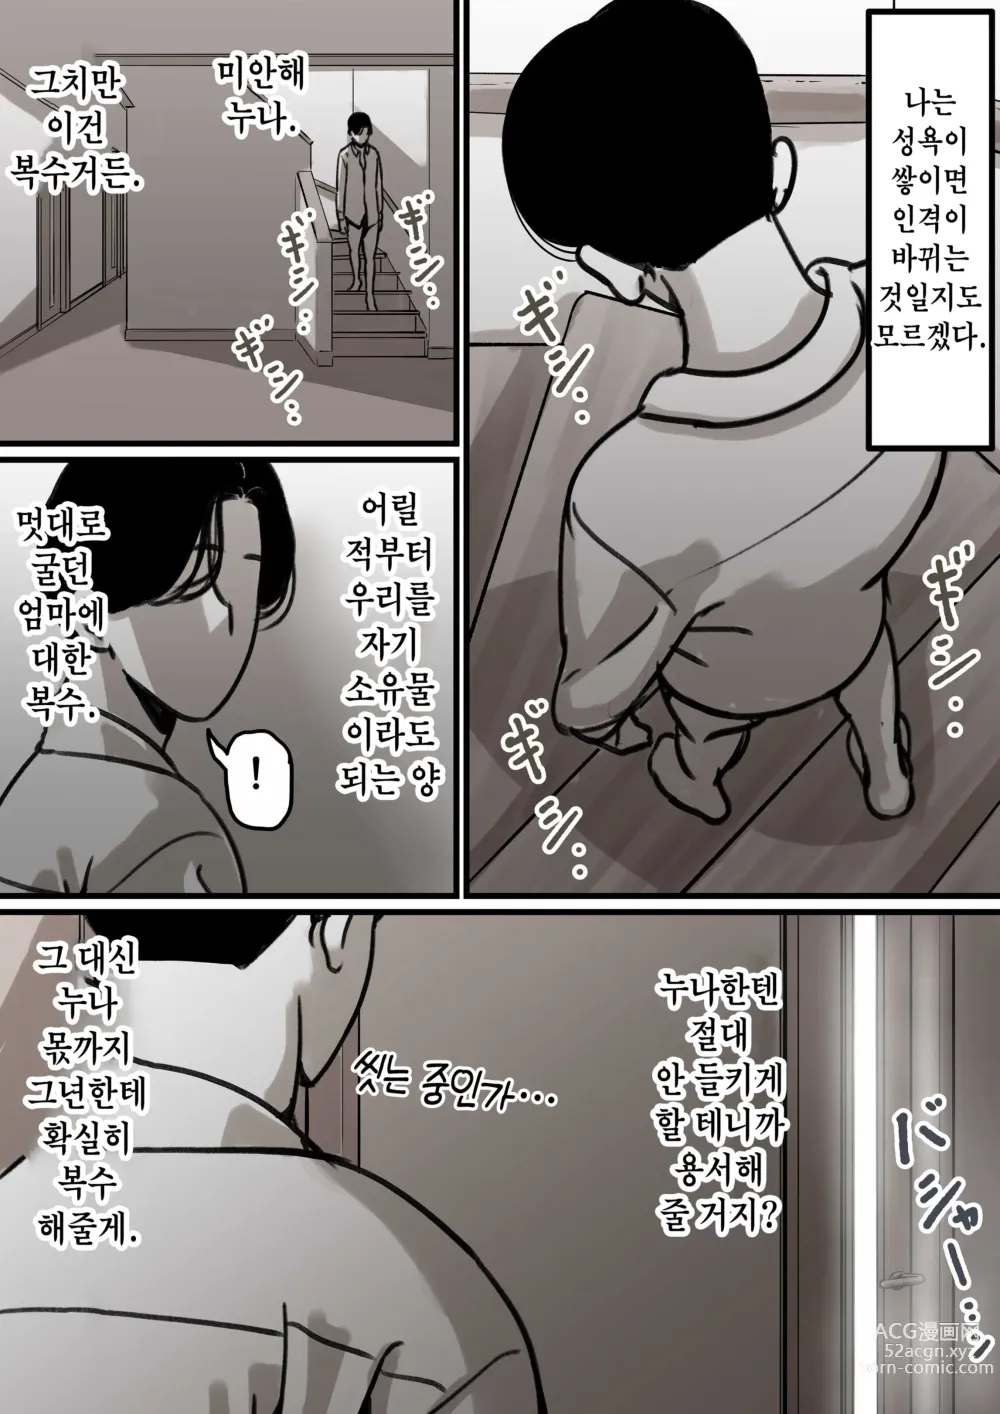 Page 7 of doujinshi 엄마와 함께 타락해 간다